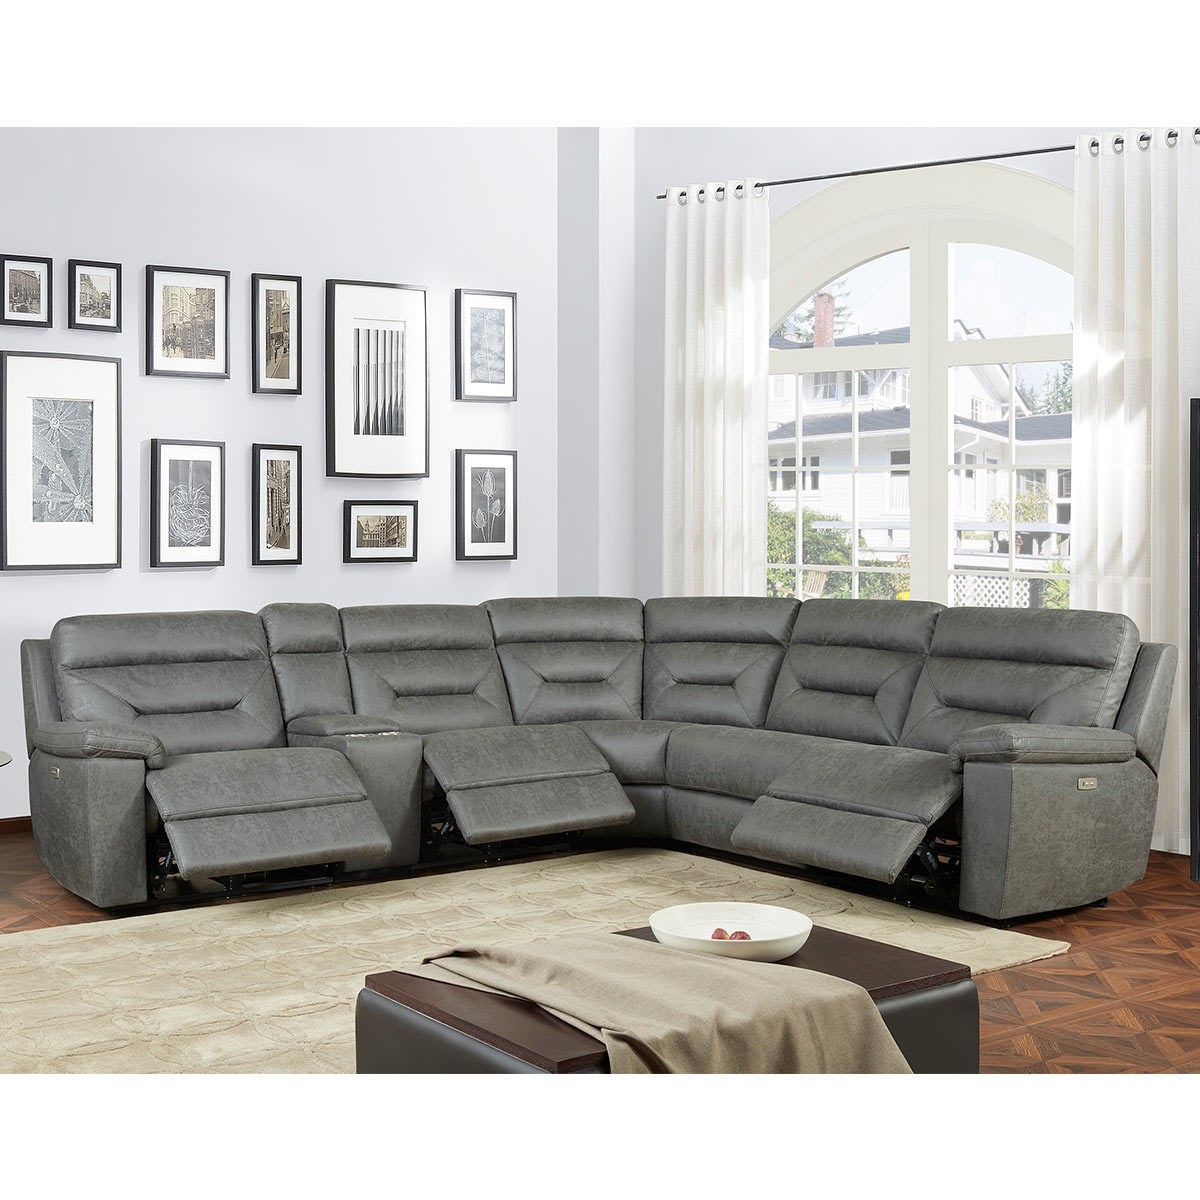 Lifestyle shot of corner sofa in living room